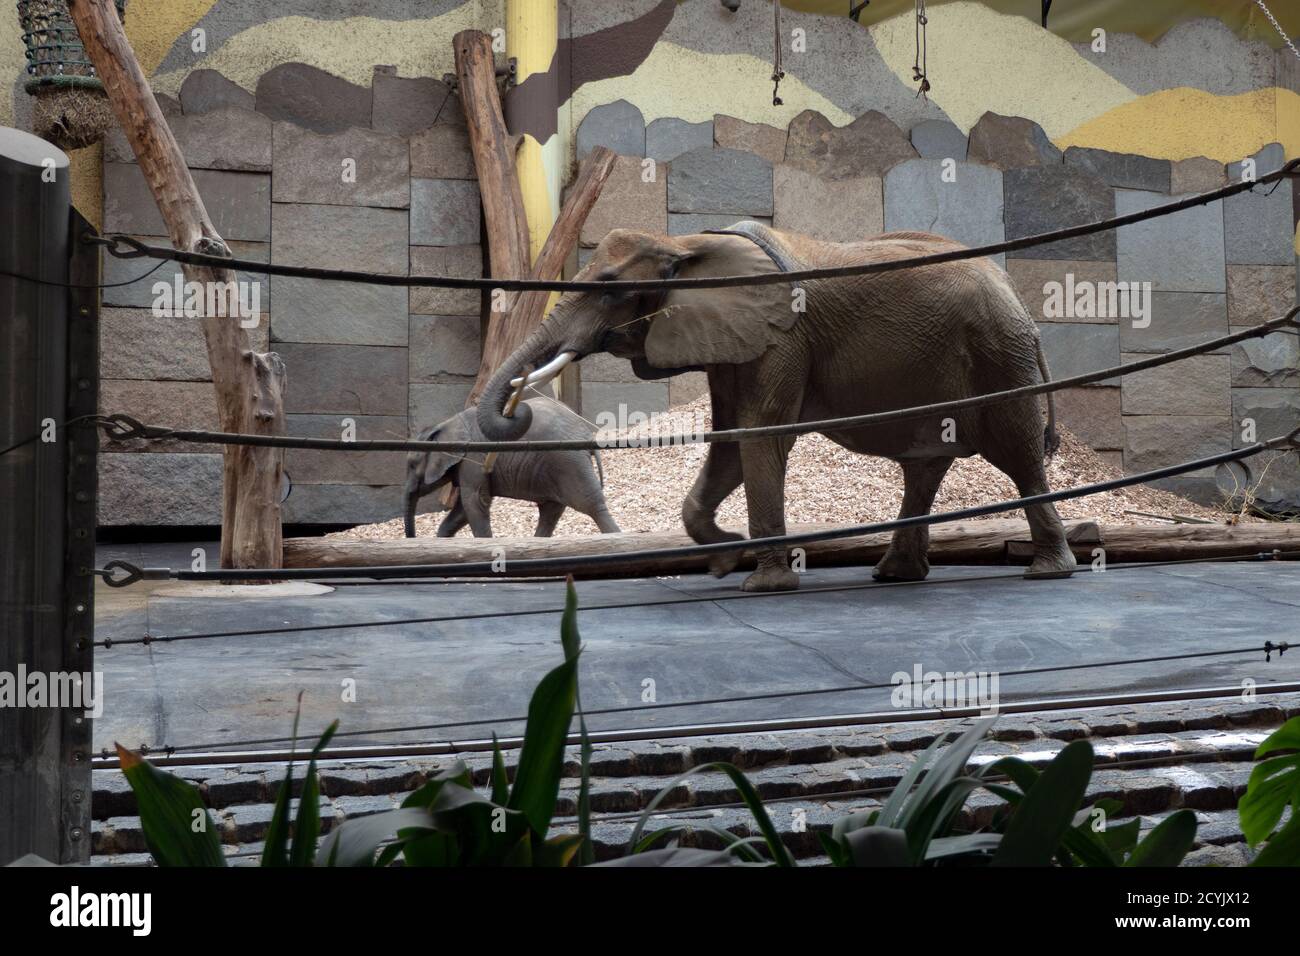 Elefanten in Innengehege im Wiener Zoo in Österreich, Europa. Tiere in zoologischen Gärten Käfig in Wien Stockfoto